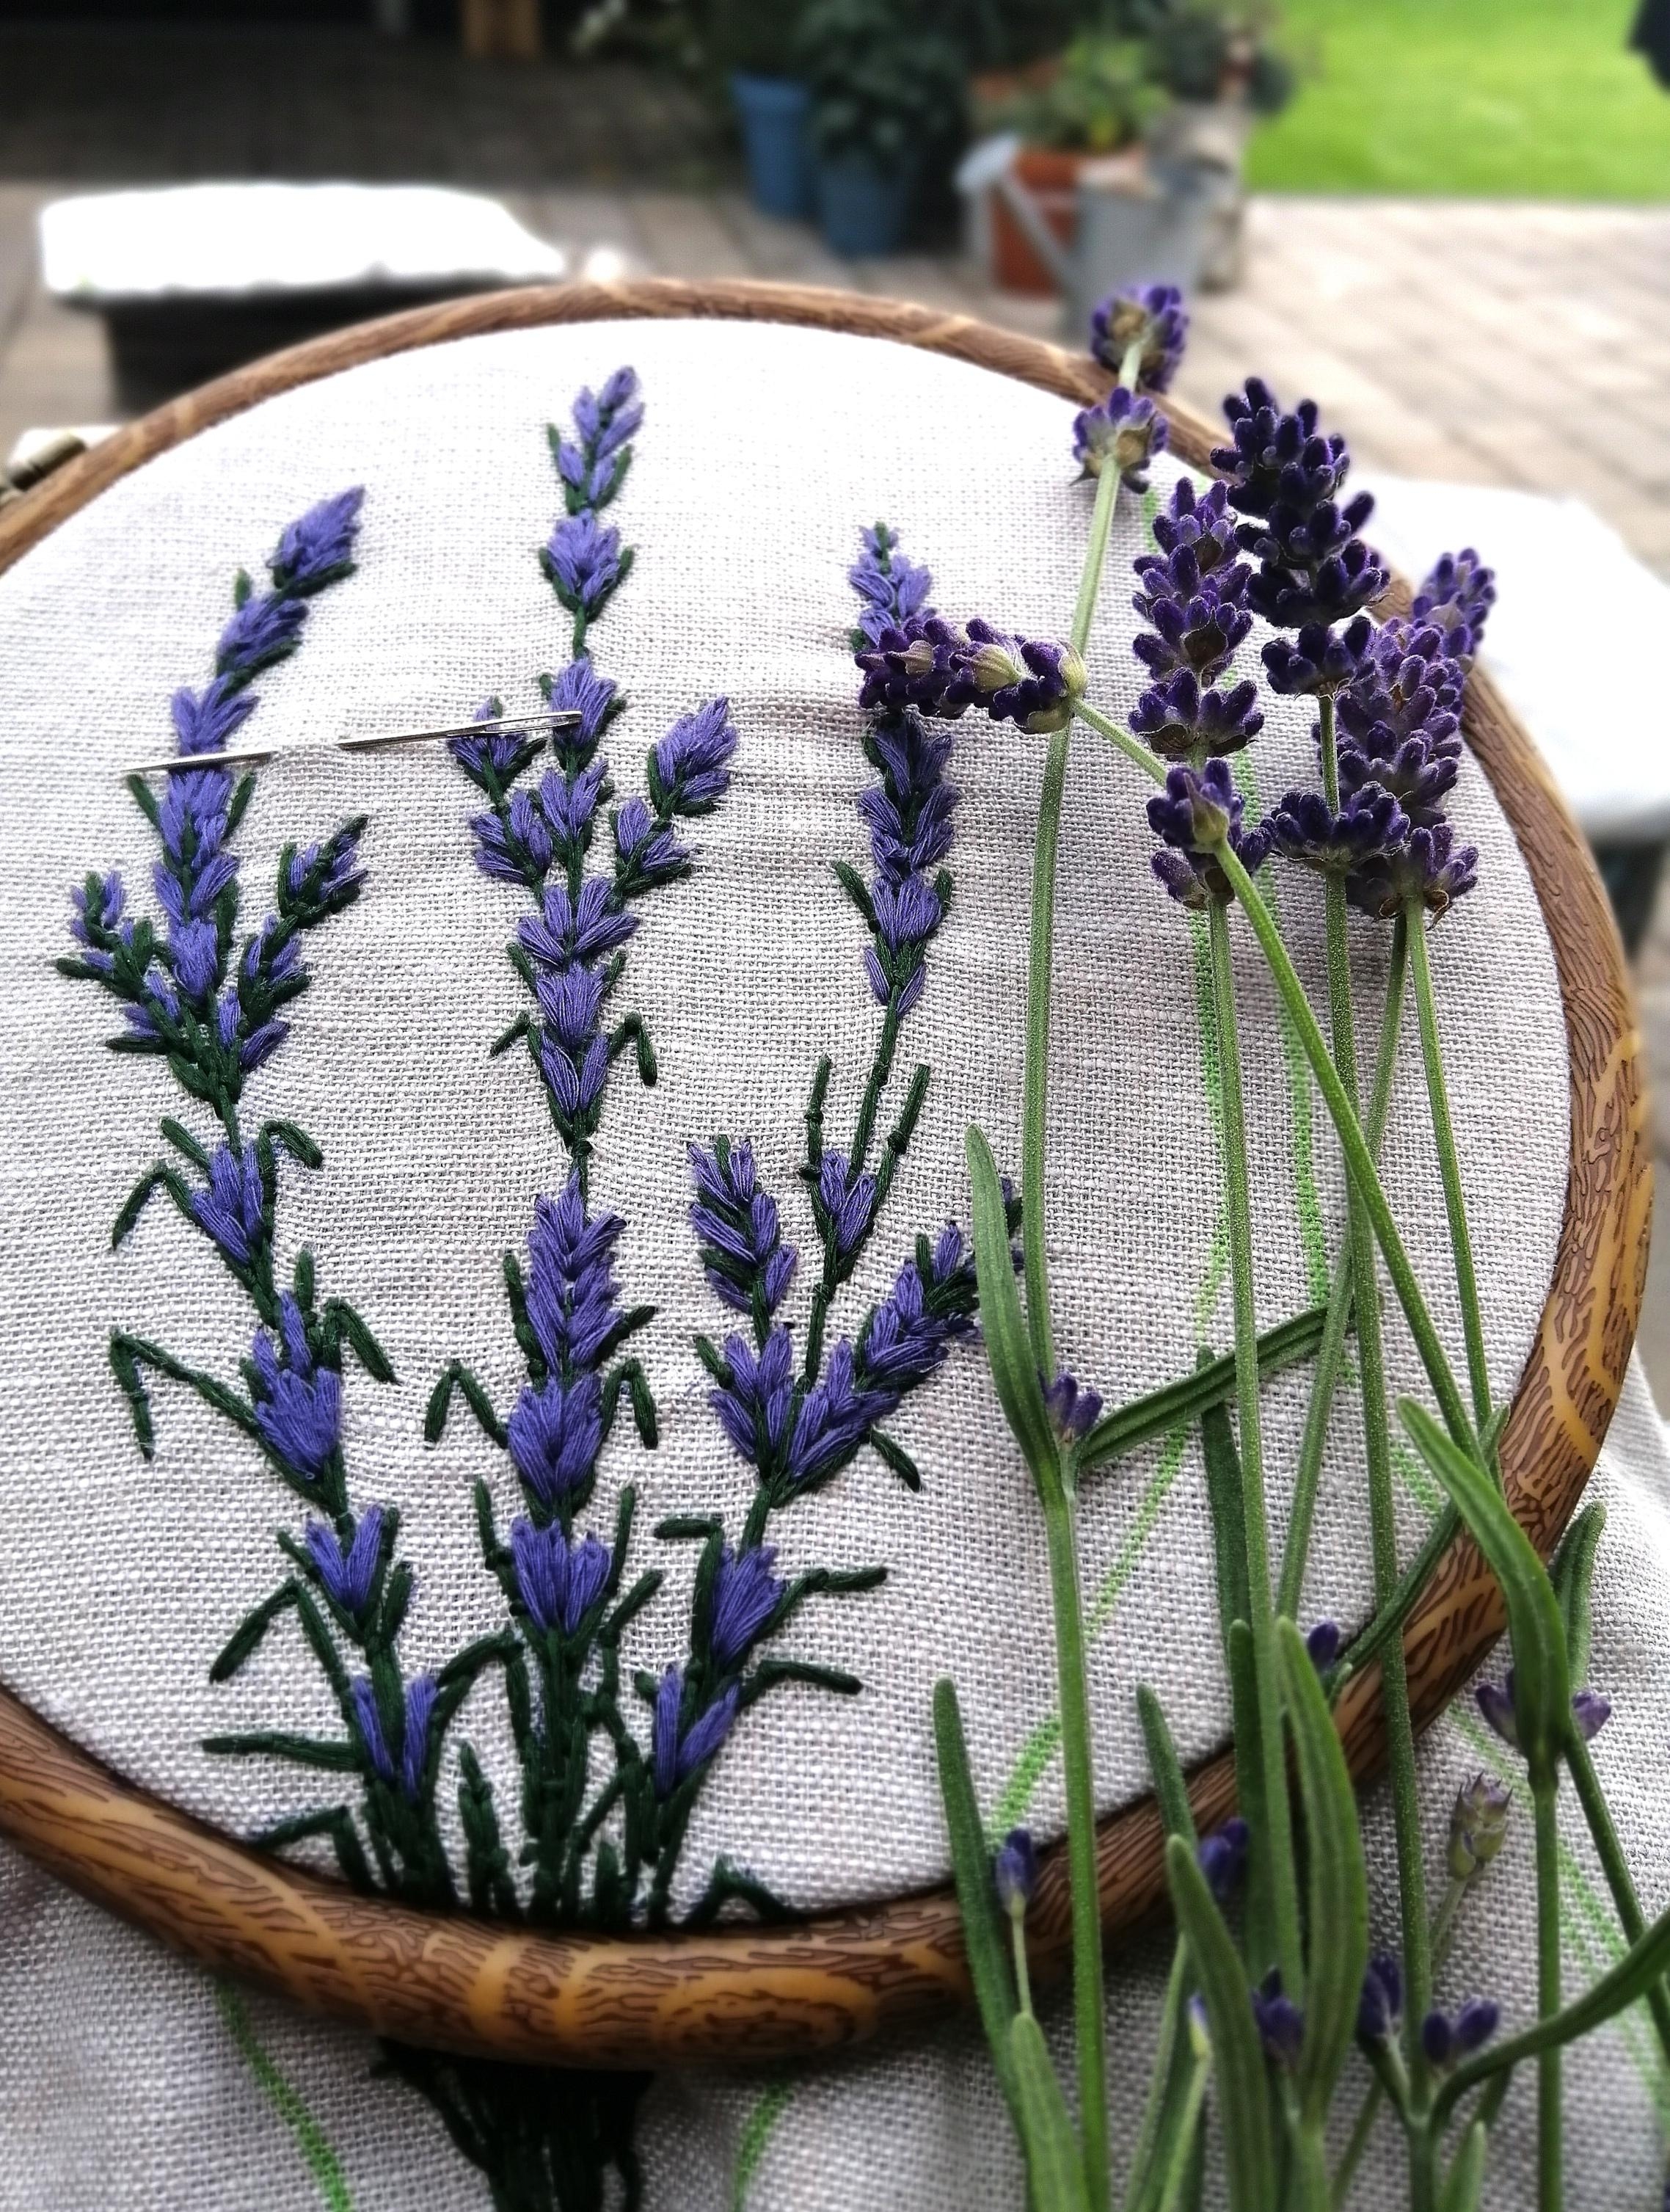 Inspiration aus dem Garten #lavendel #botanicalstitch 🌿 #lavandulalove #embroiderylove